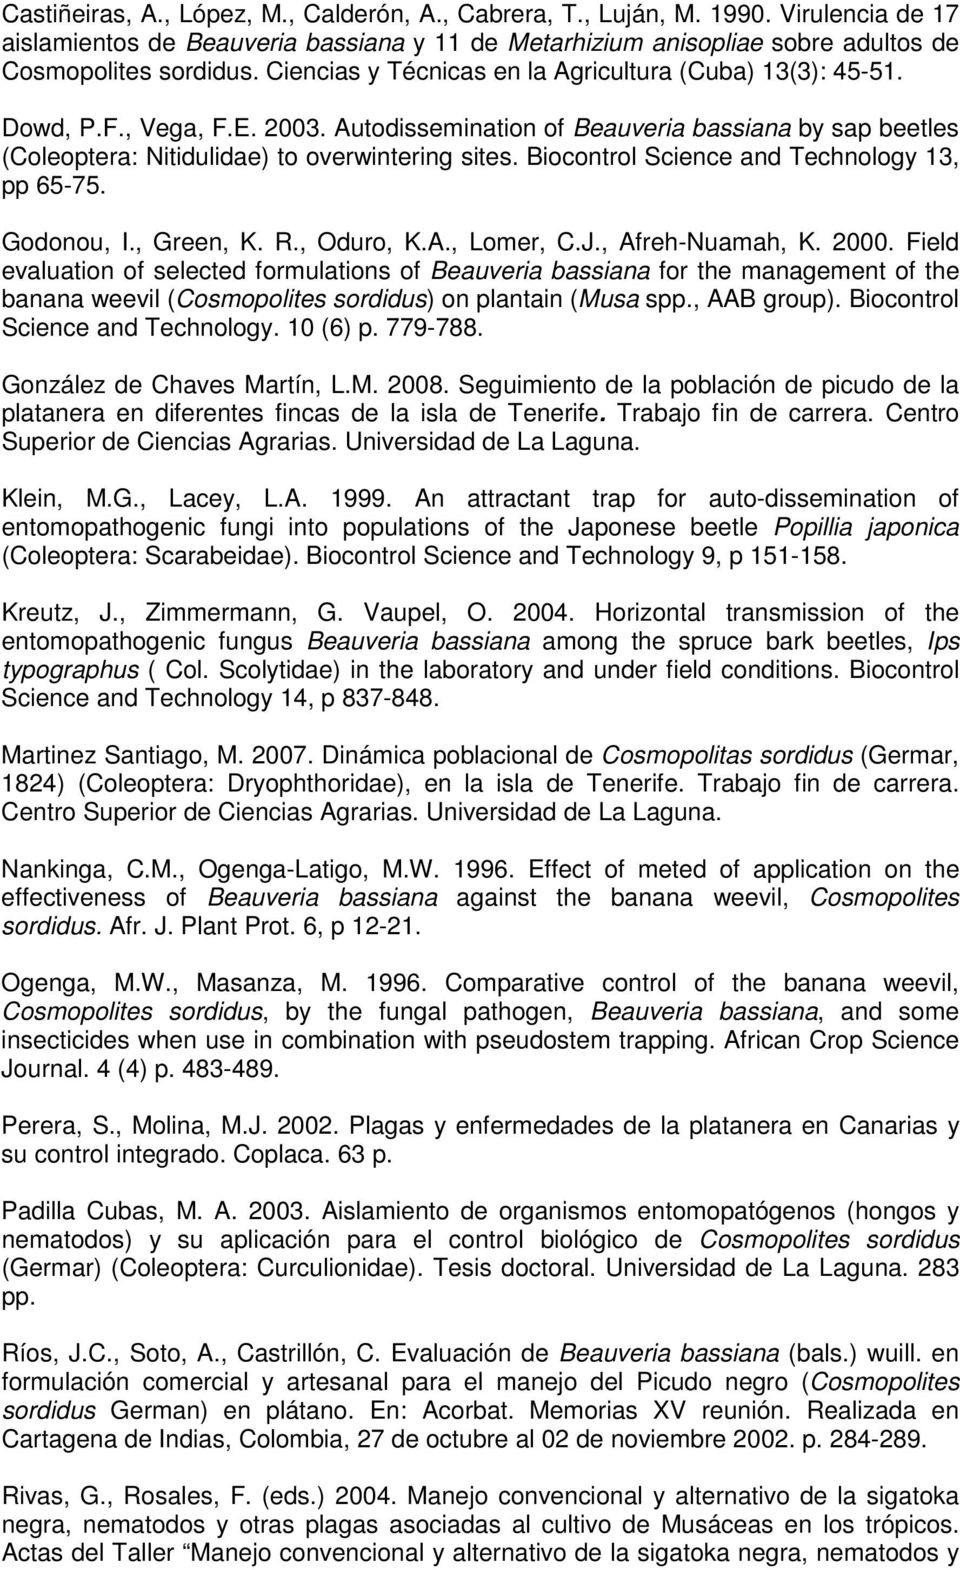 Biocontrol Science and Technology 13, pp 65-75. Godonou, I., Green, K. R., Oduro, K.A., Lomer, C.J., Afreh-Nuamah, K. 2000.